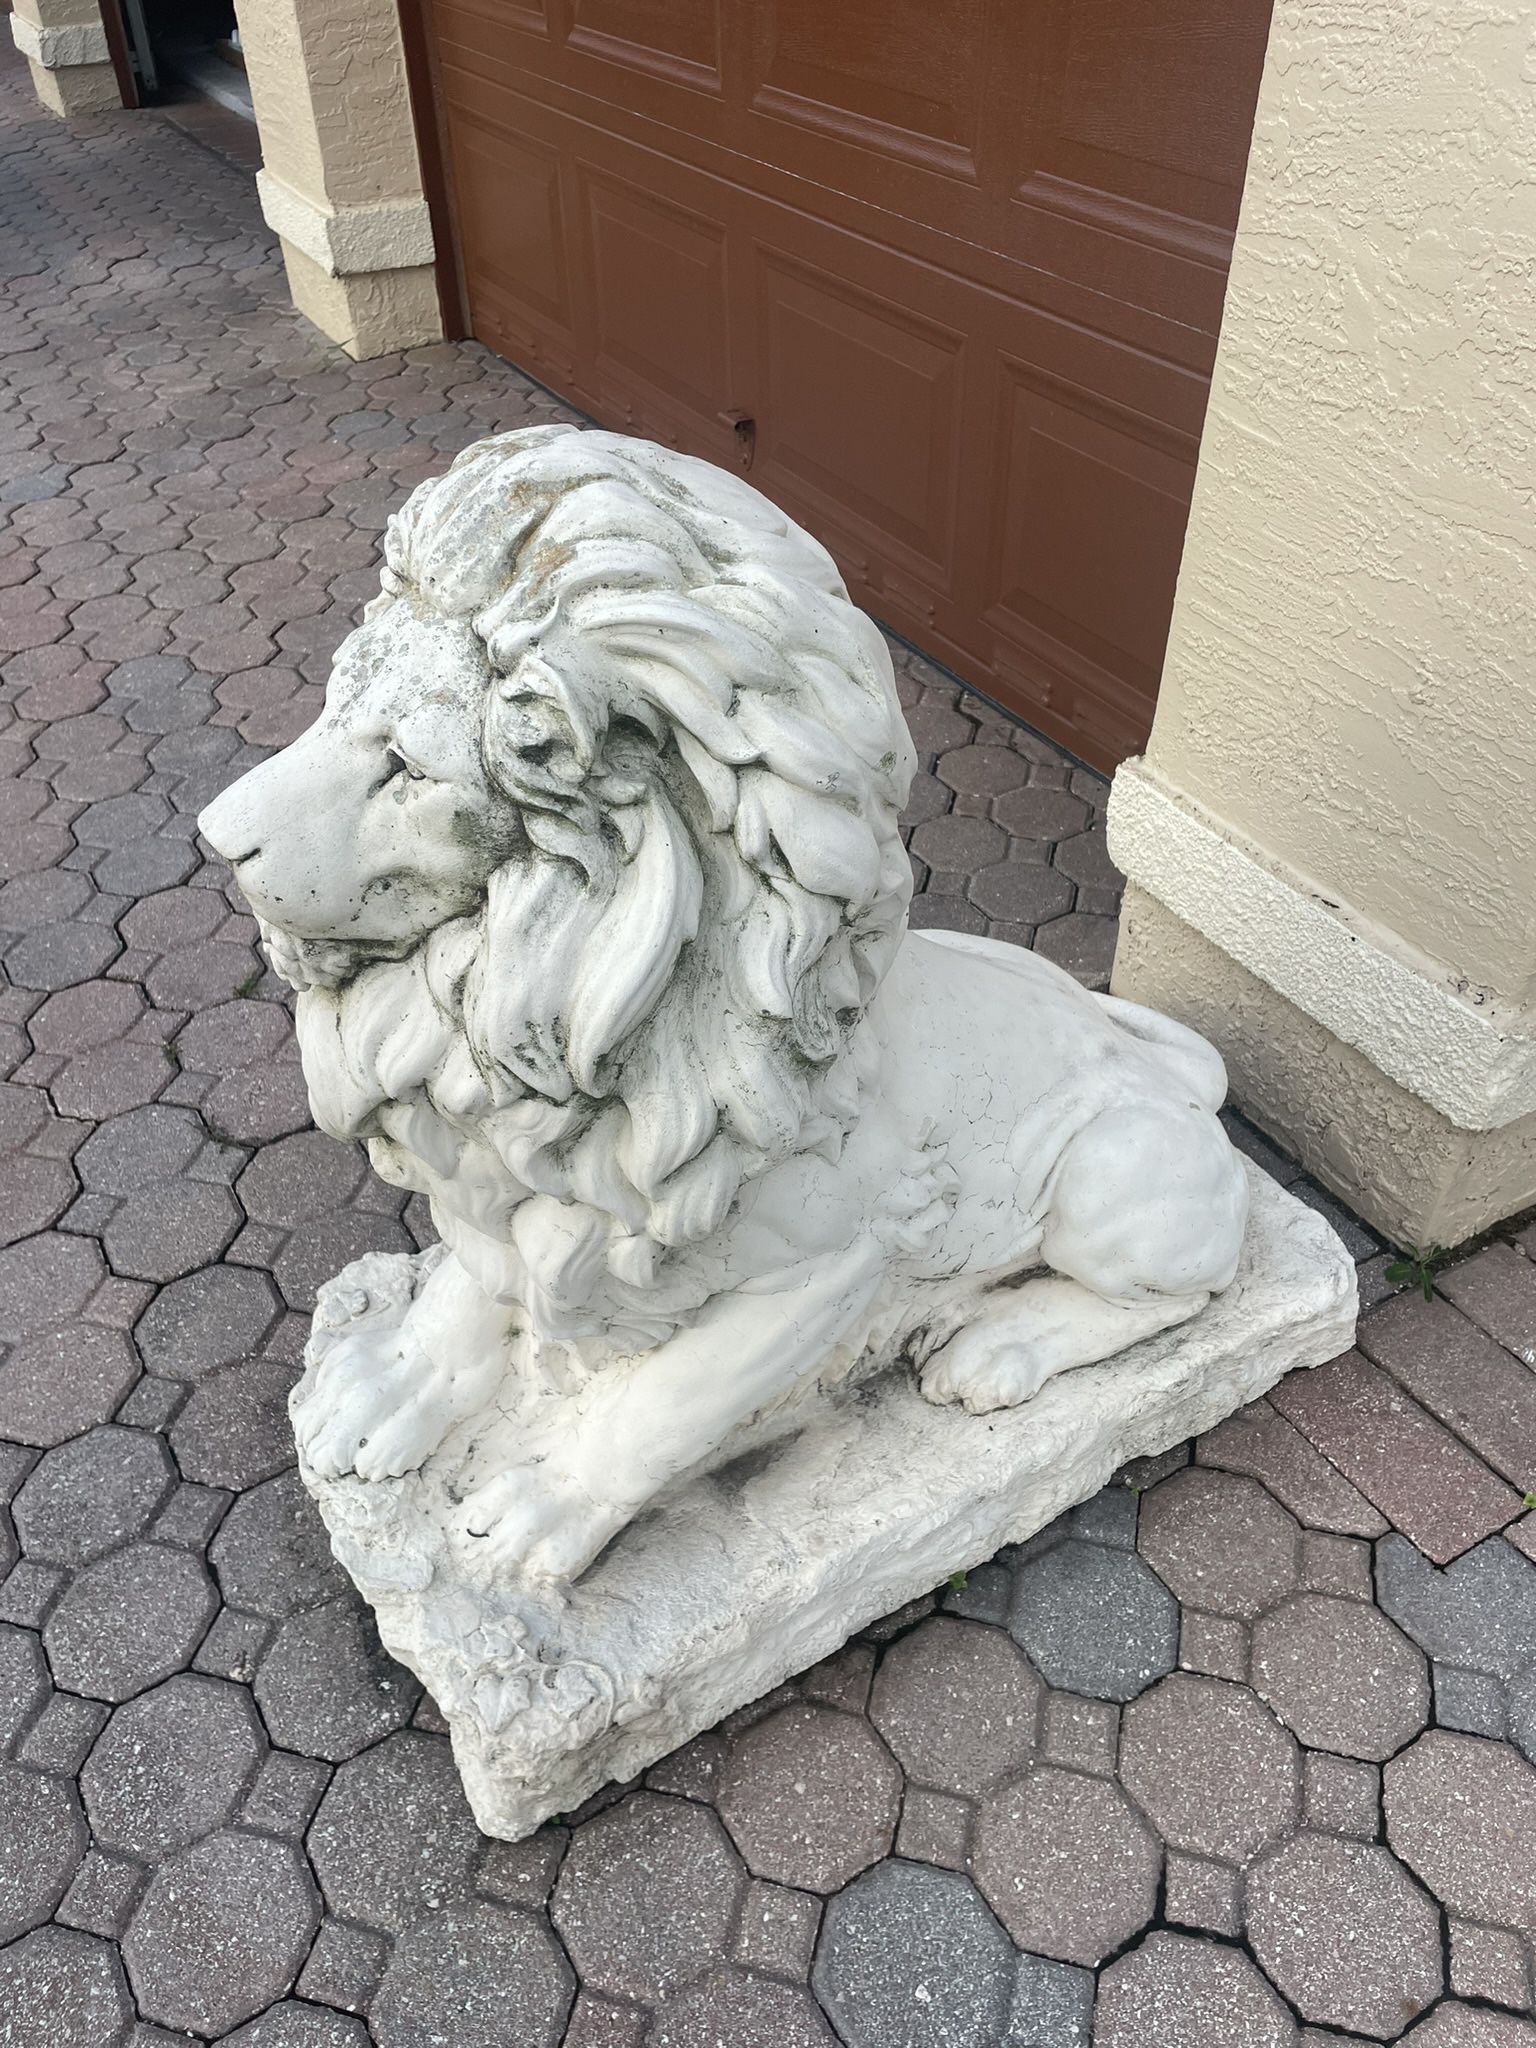 Decorative Stone Lions